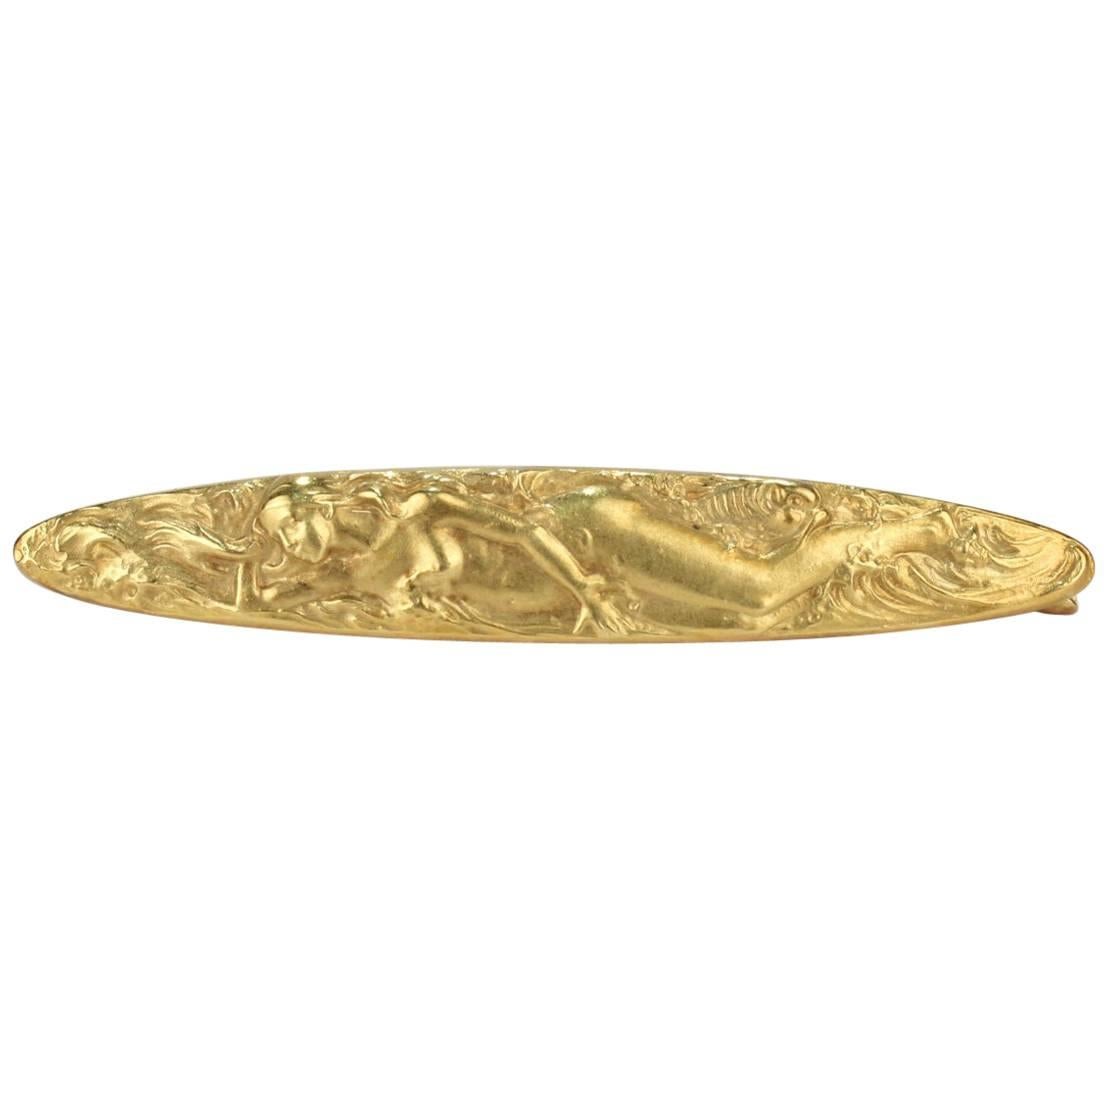 Art Nouveau Period 14 Karat Yellow Gold Lapel Pin with a Nude Lady by Krementz